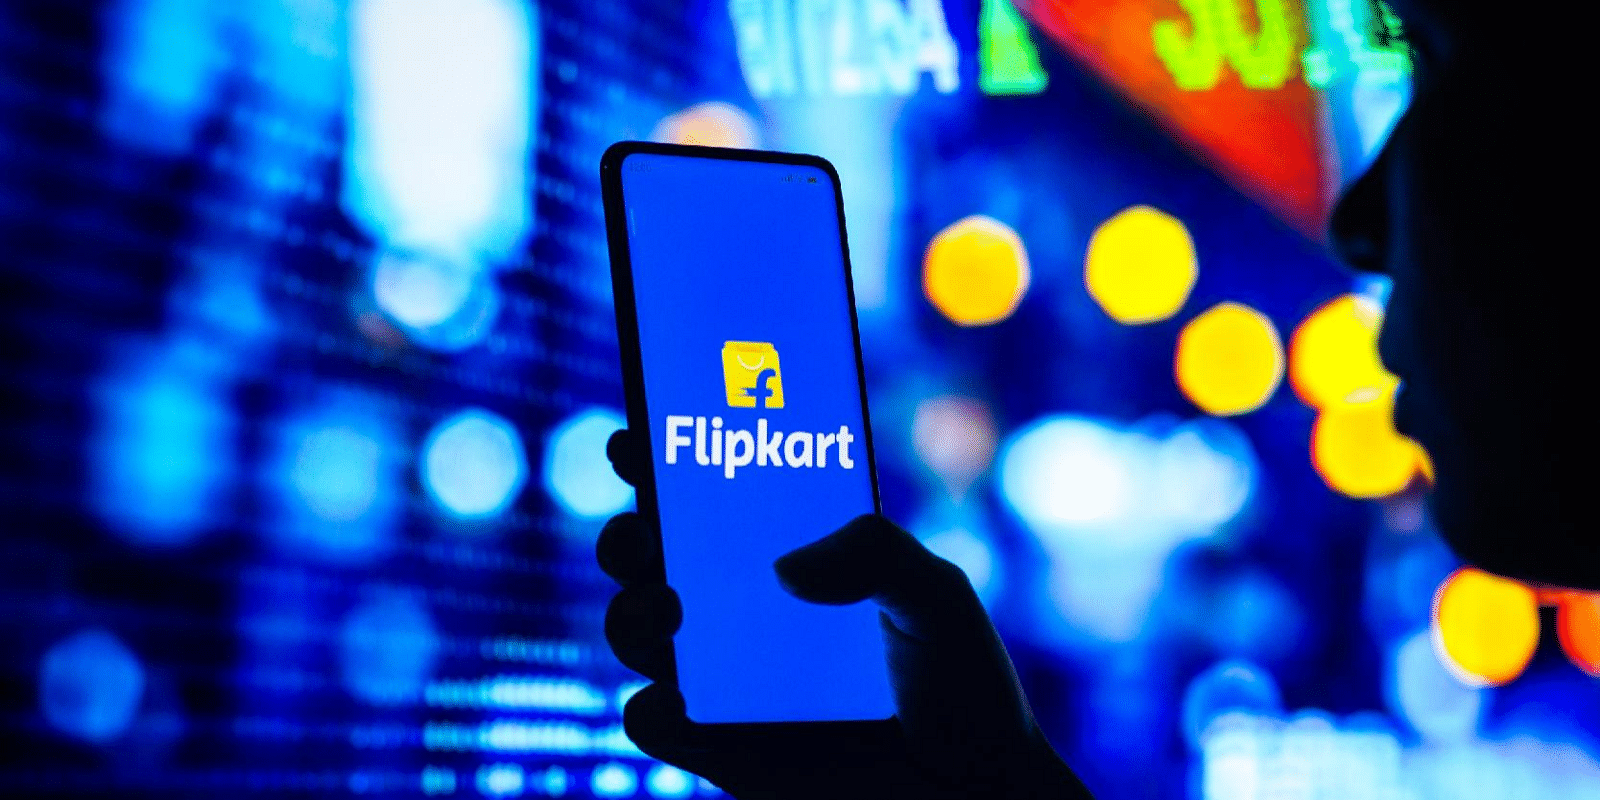 Flipkart to trim workforce by 5-7% via performance-based cuts: Report